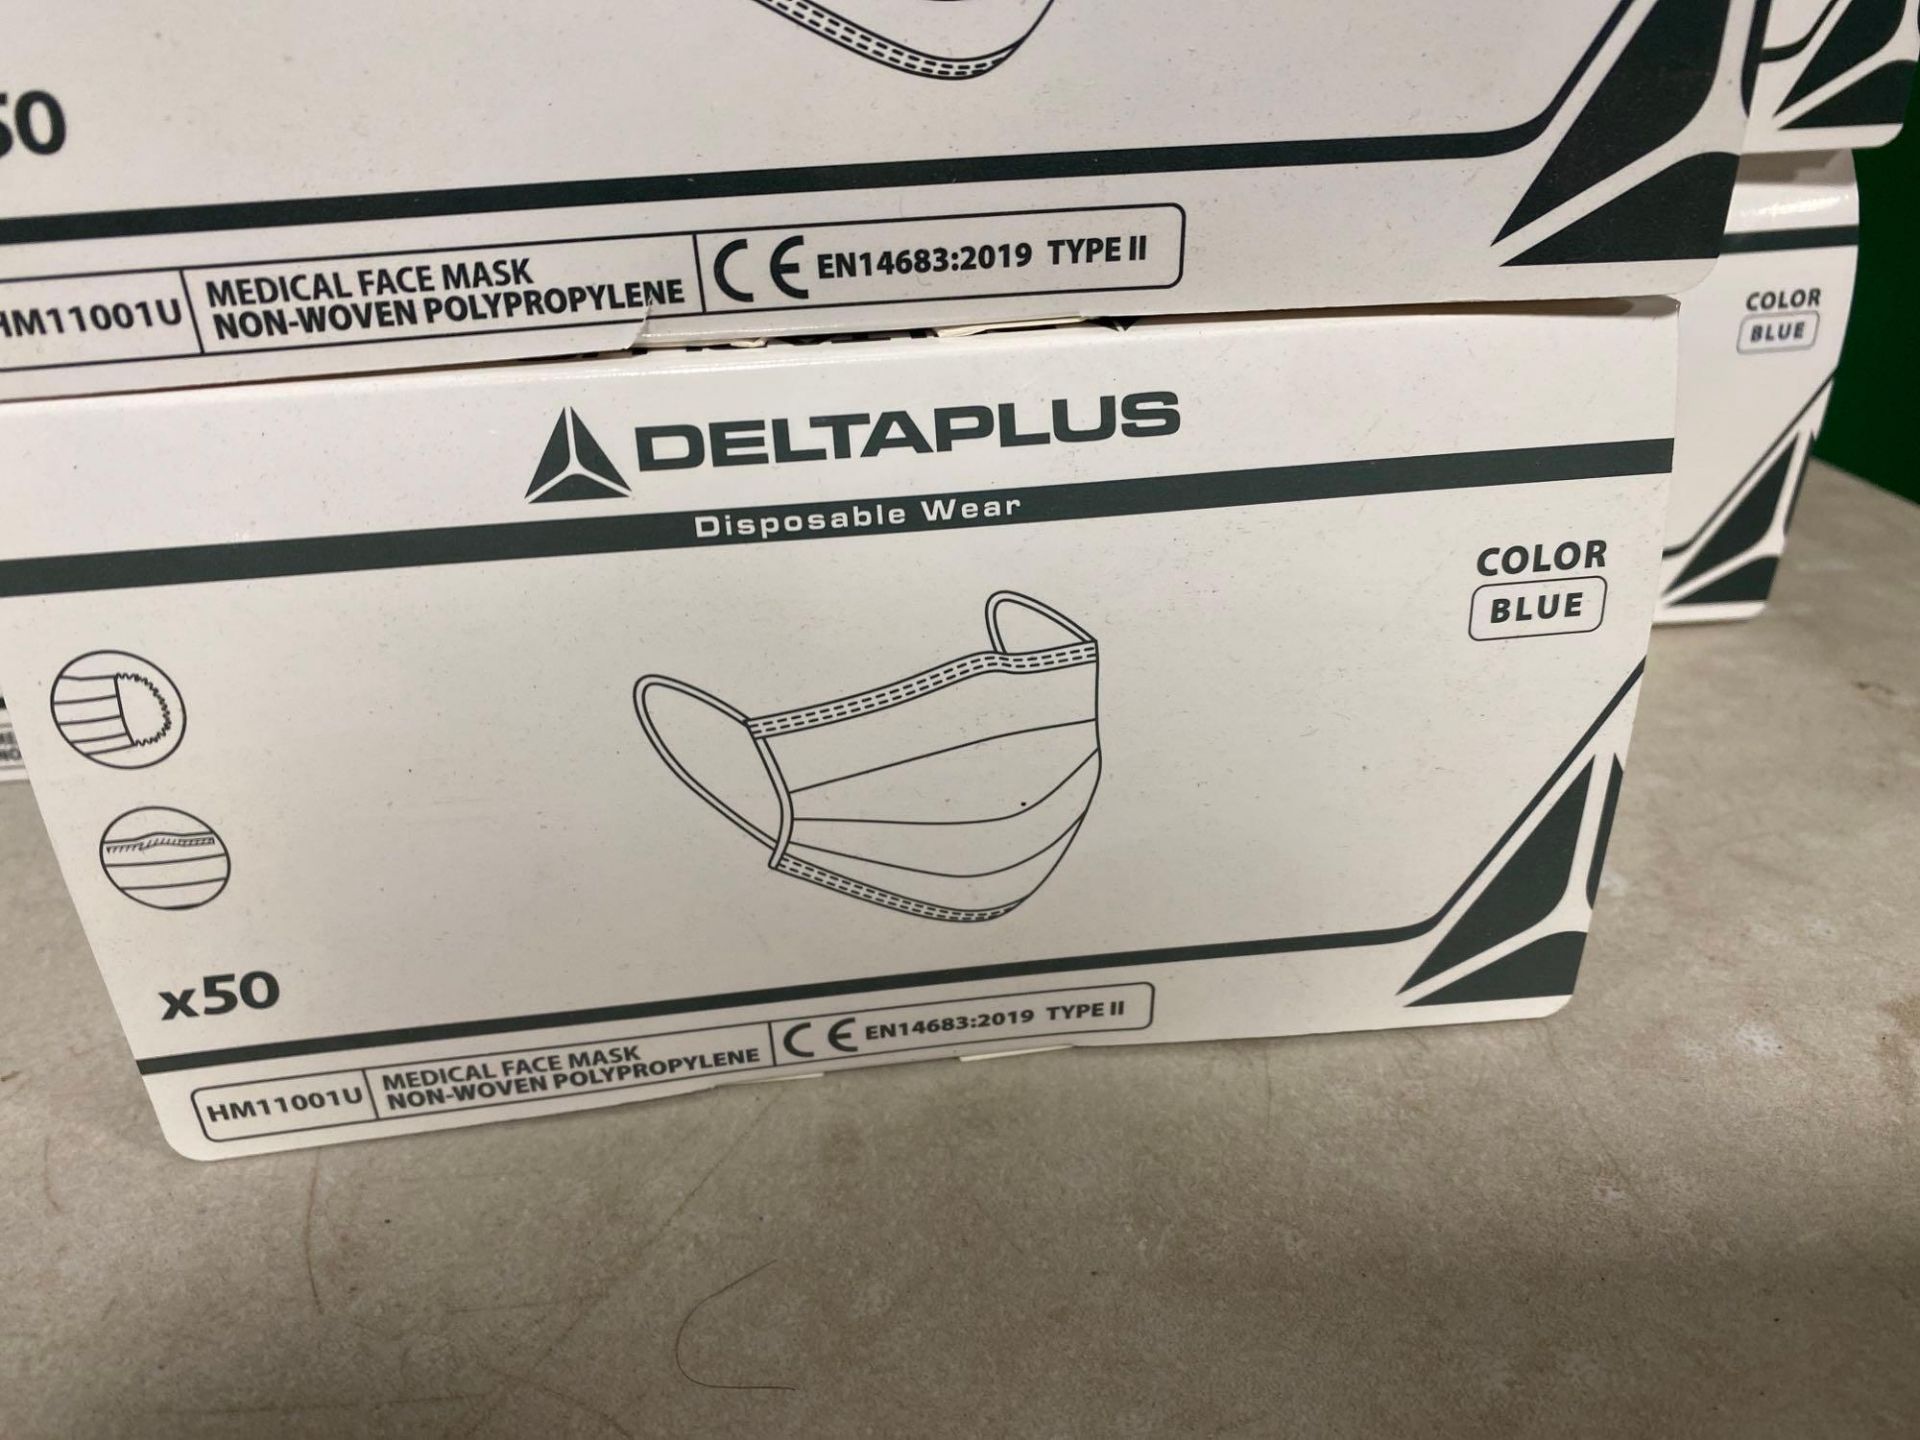 15 Boxes 50 per box of Delta plus disposable face masks - Image 2 of 2